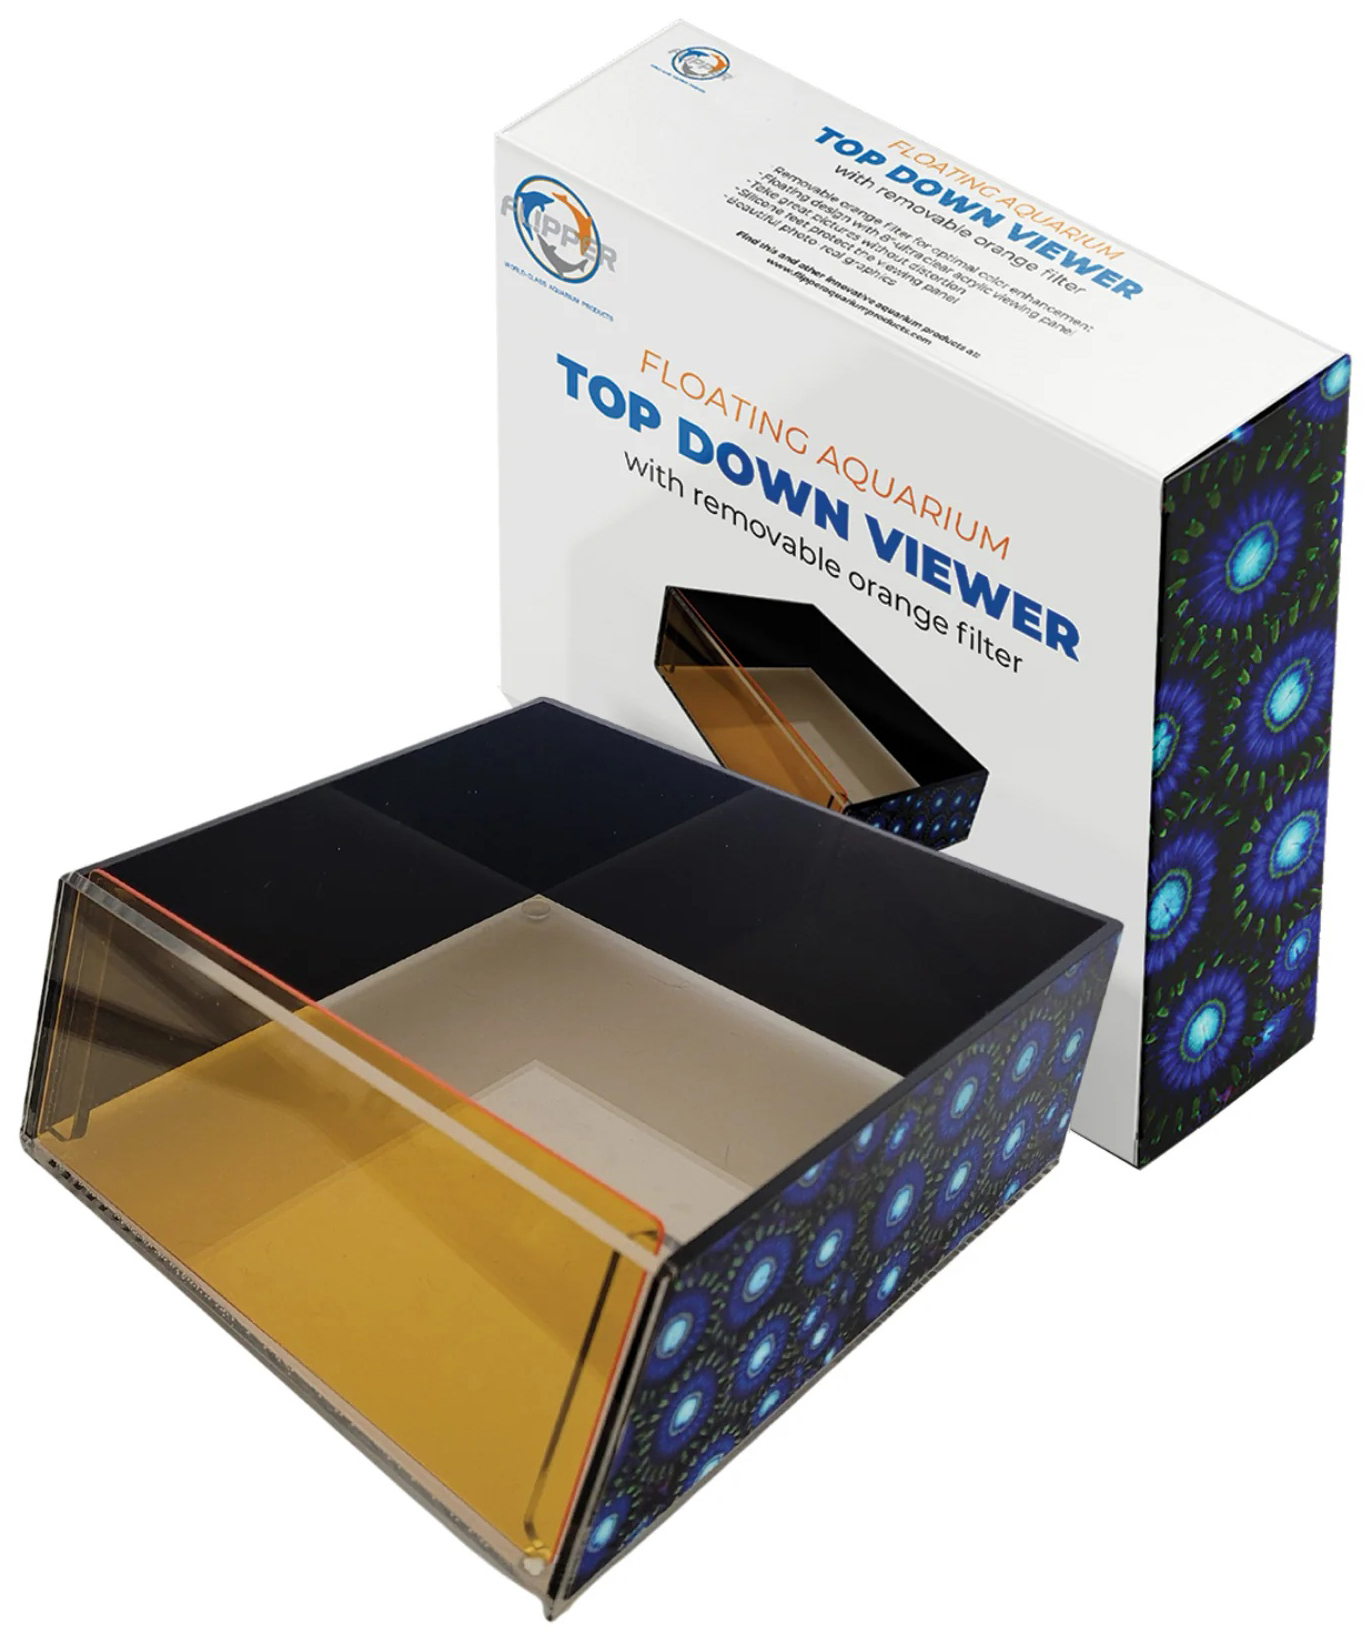 Flipper TopDown Viewer  Tools for aquarium maintenance